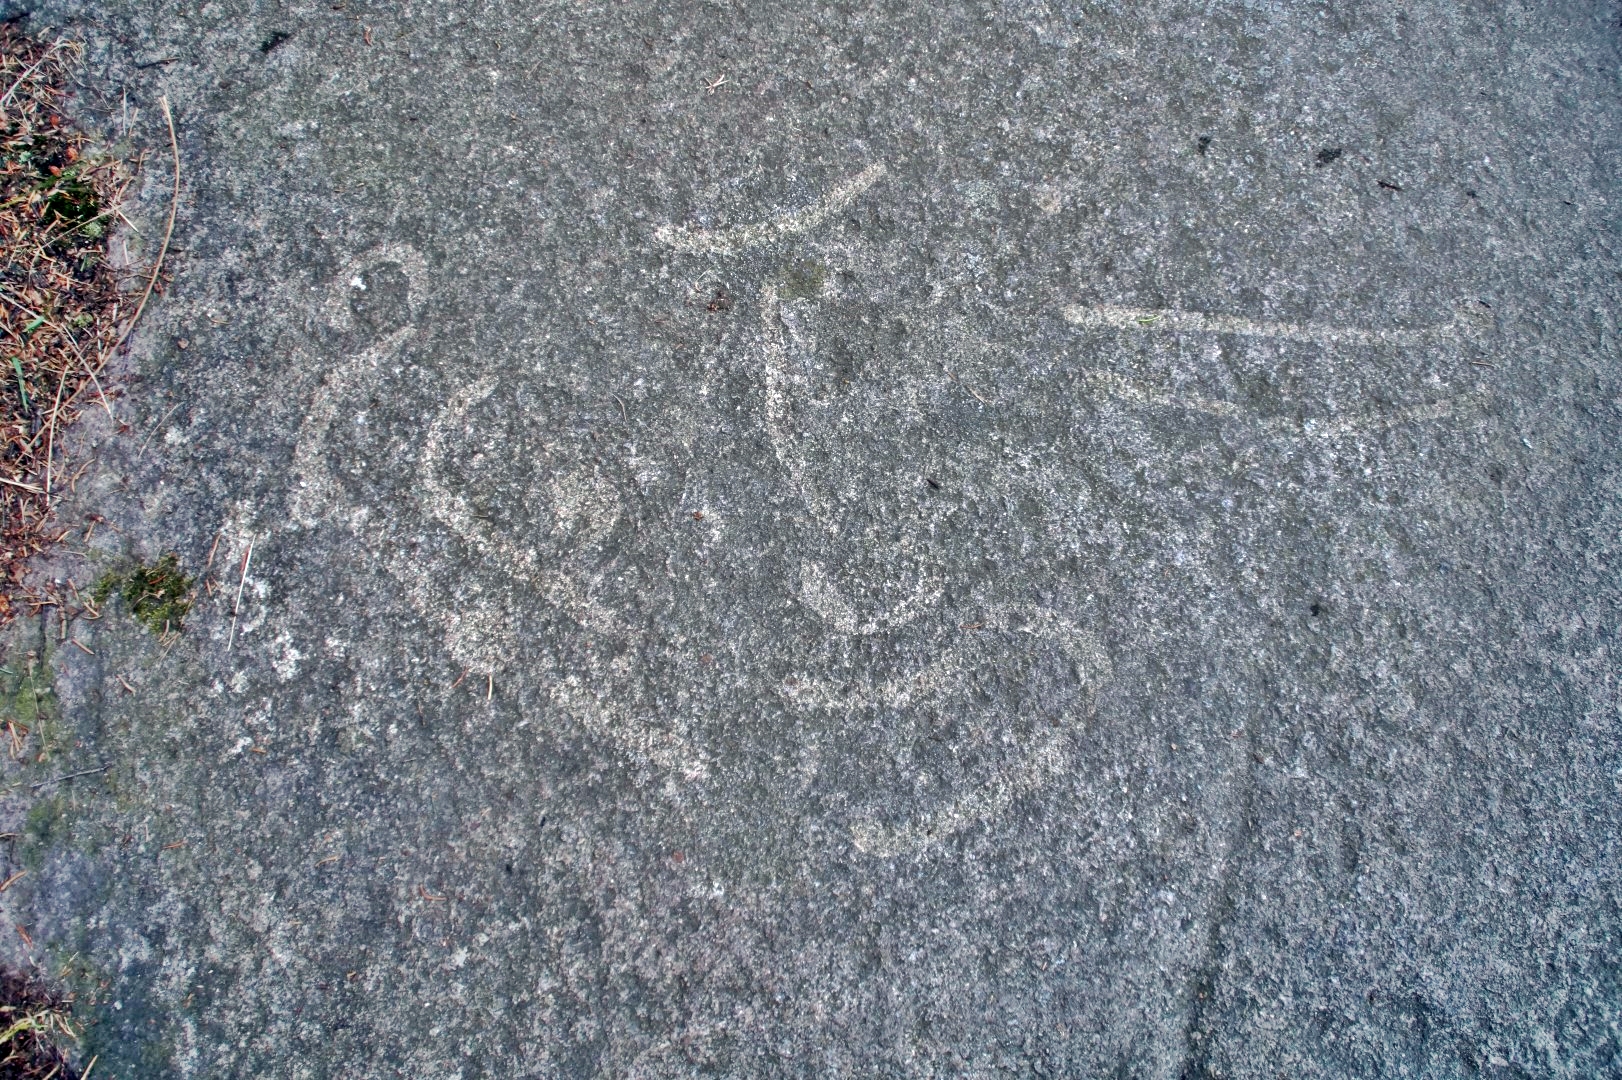 Bronze Age petroglyph!